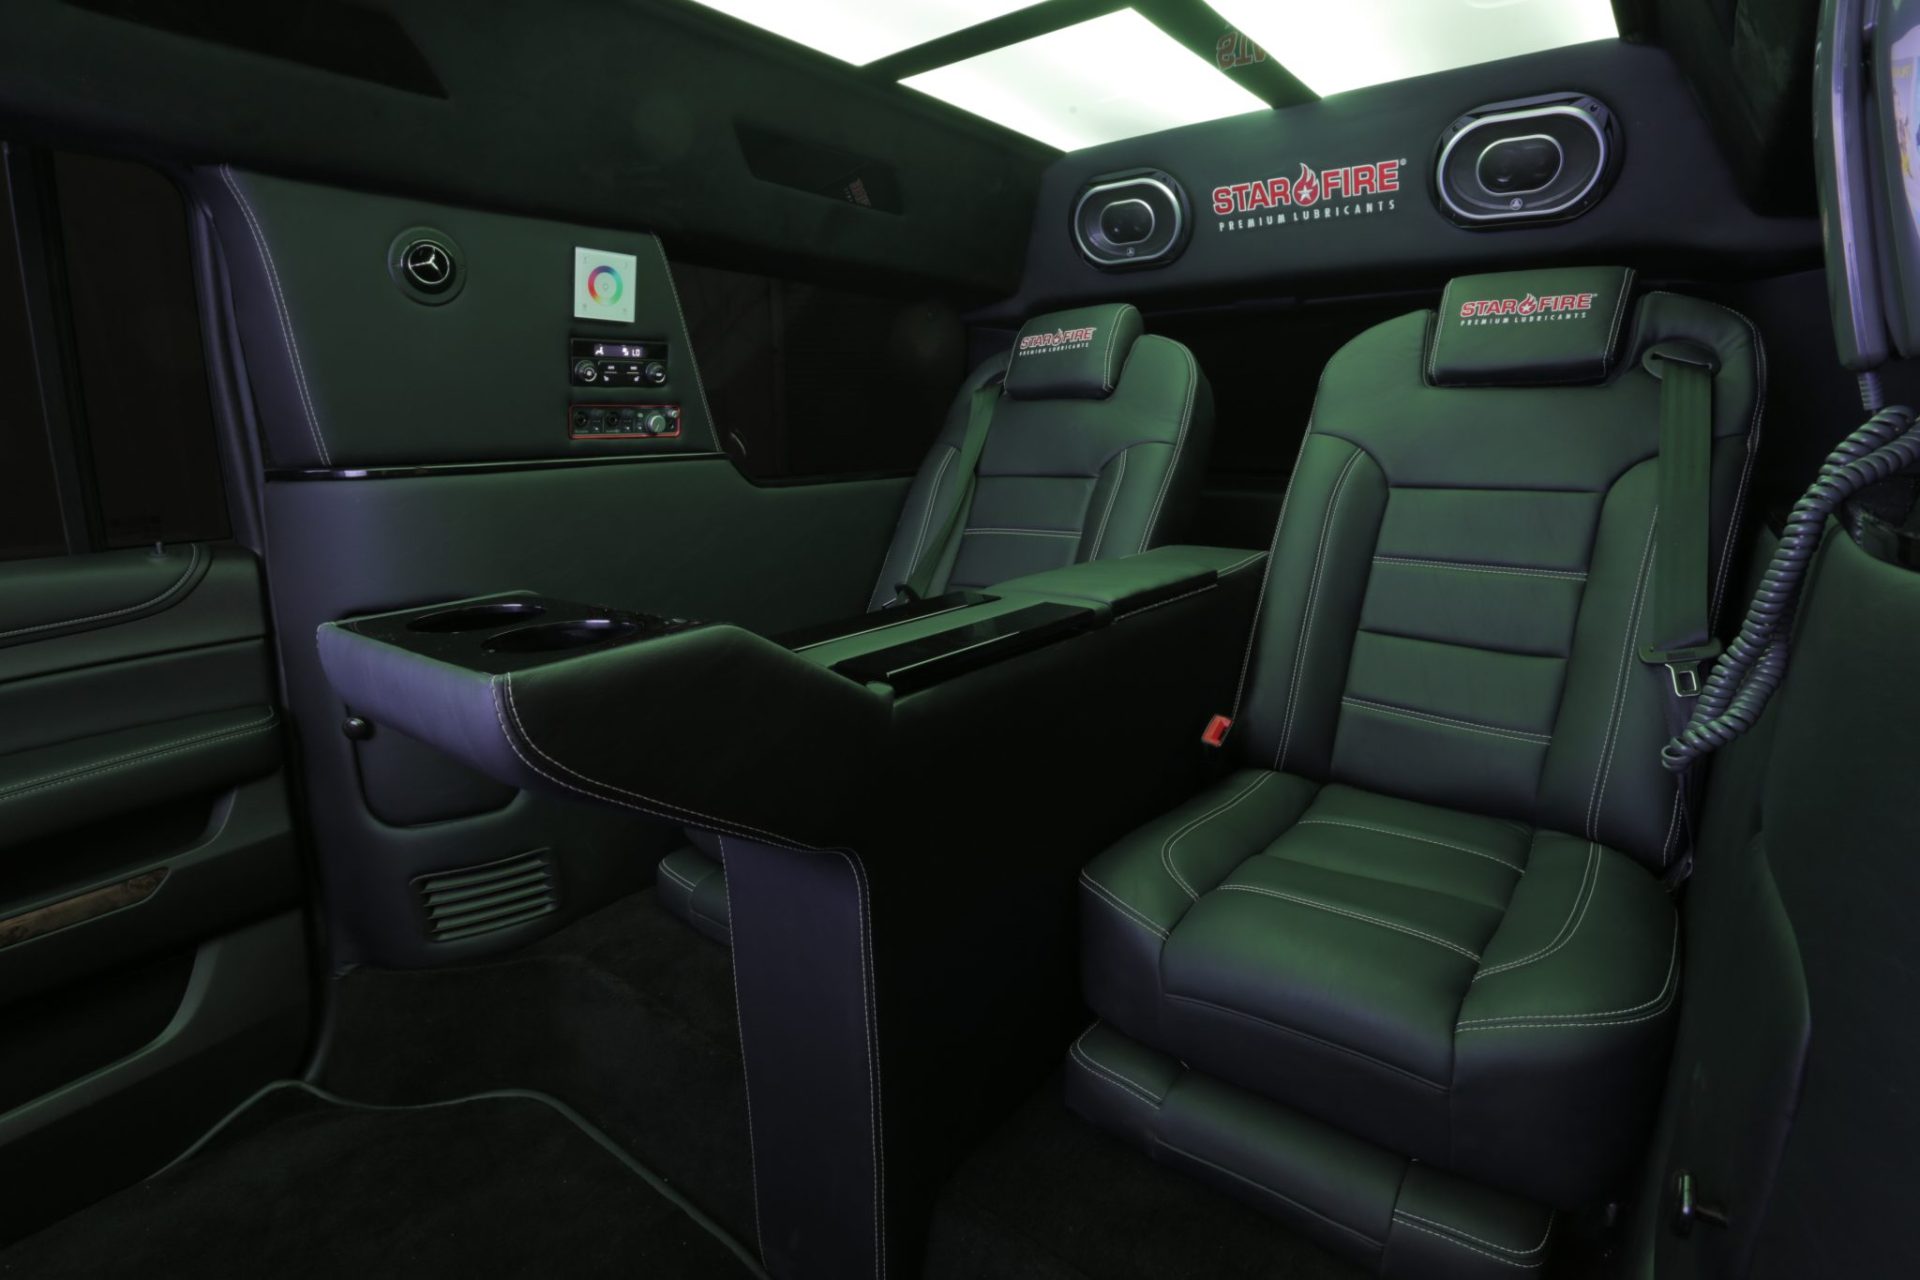 GMC Denali XL CEO Mobile Office Limousine - Interior Photo #1